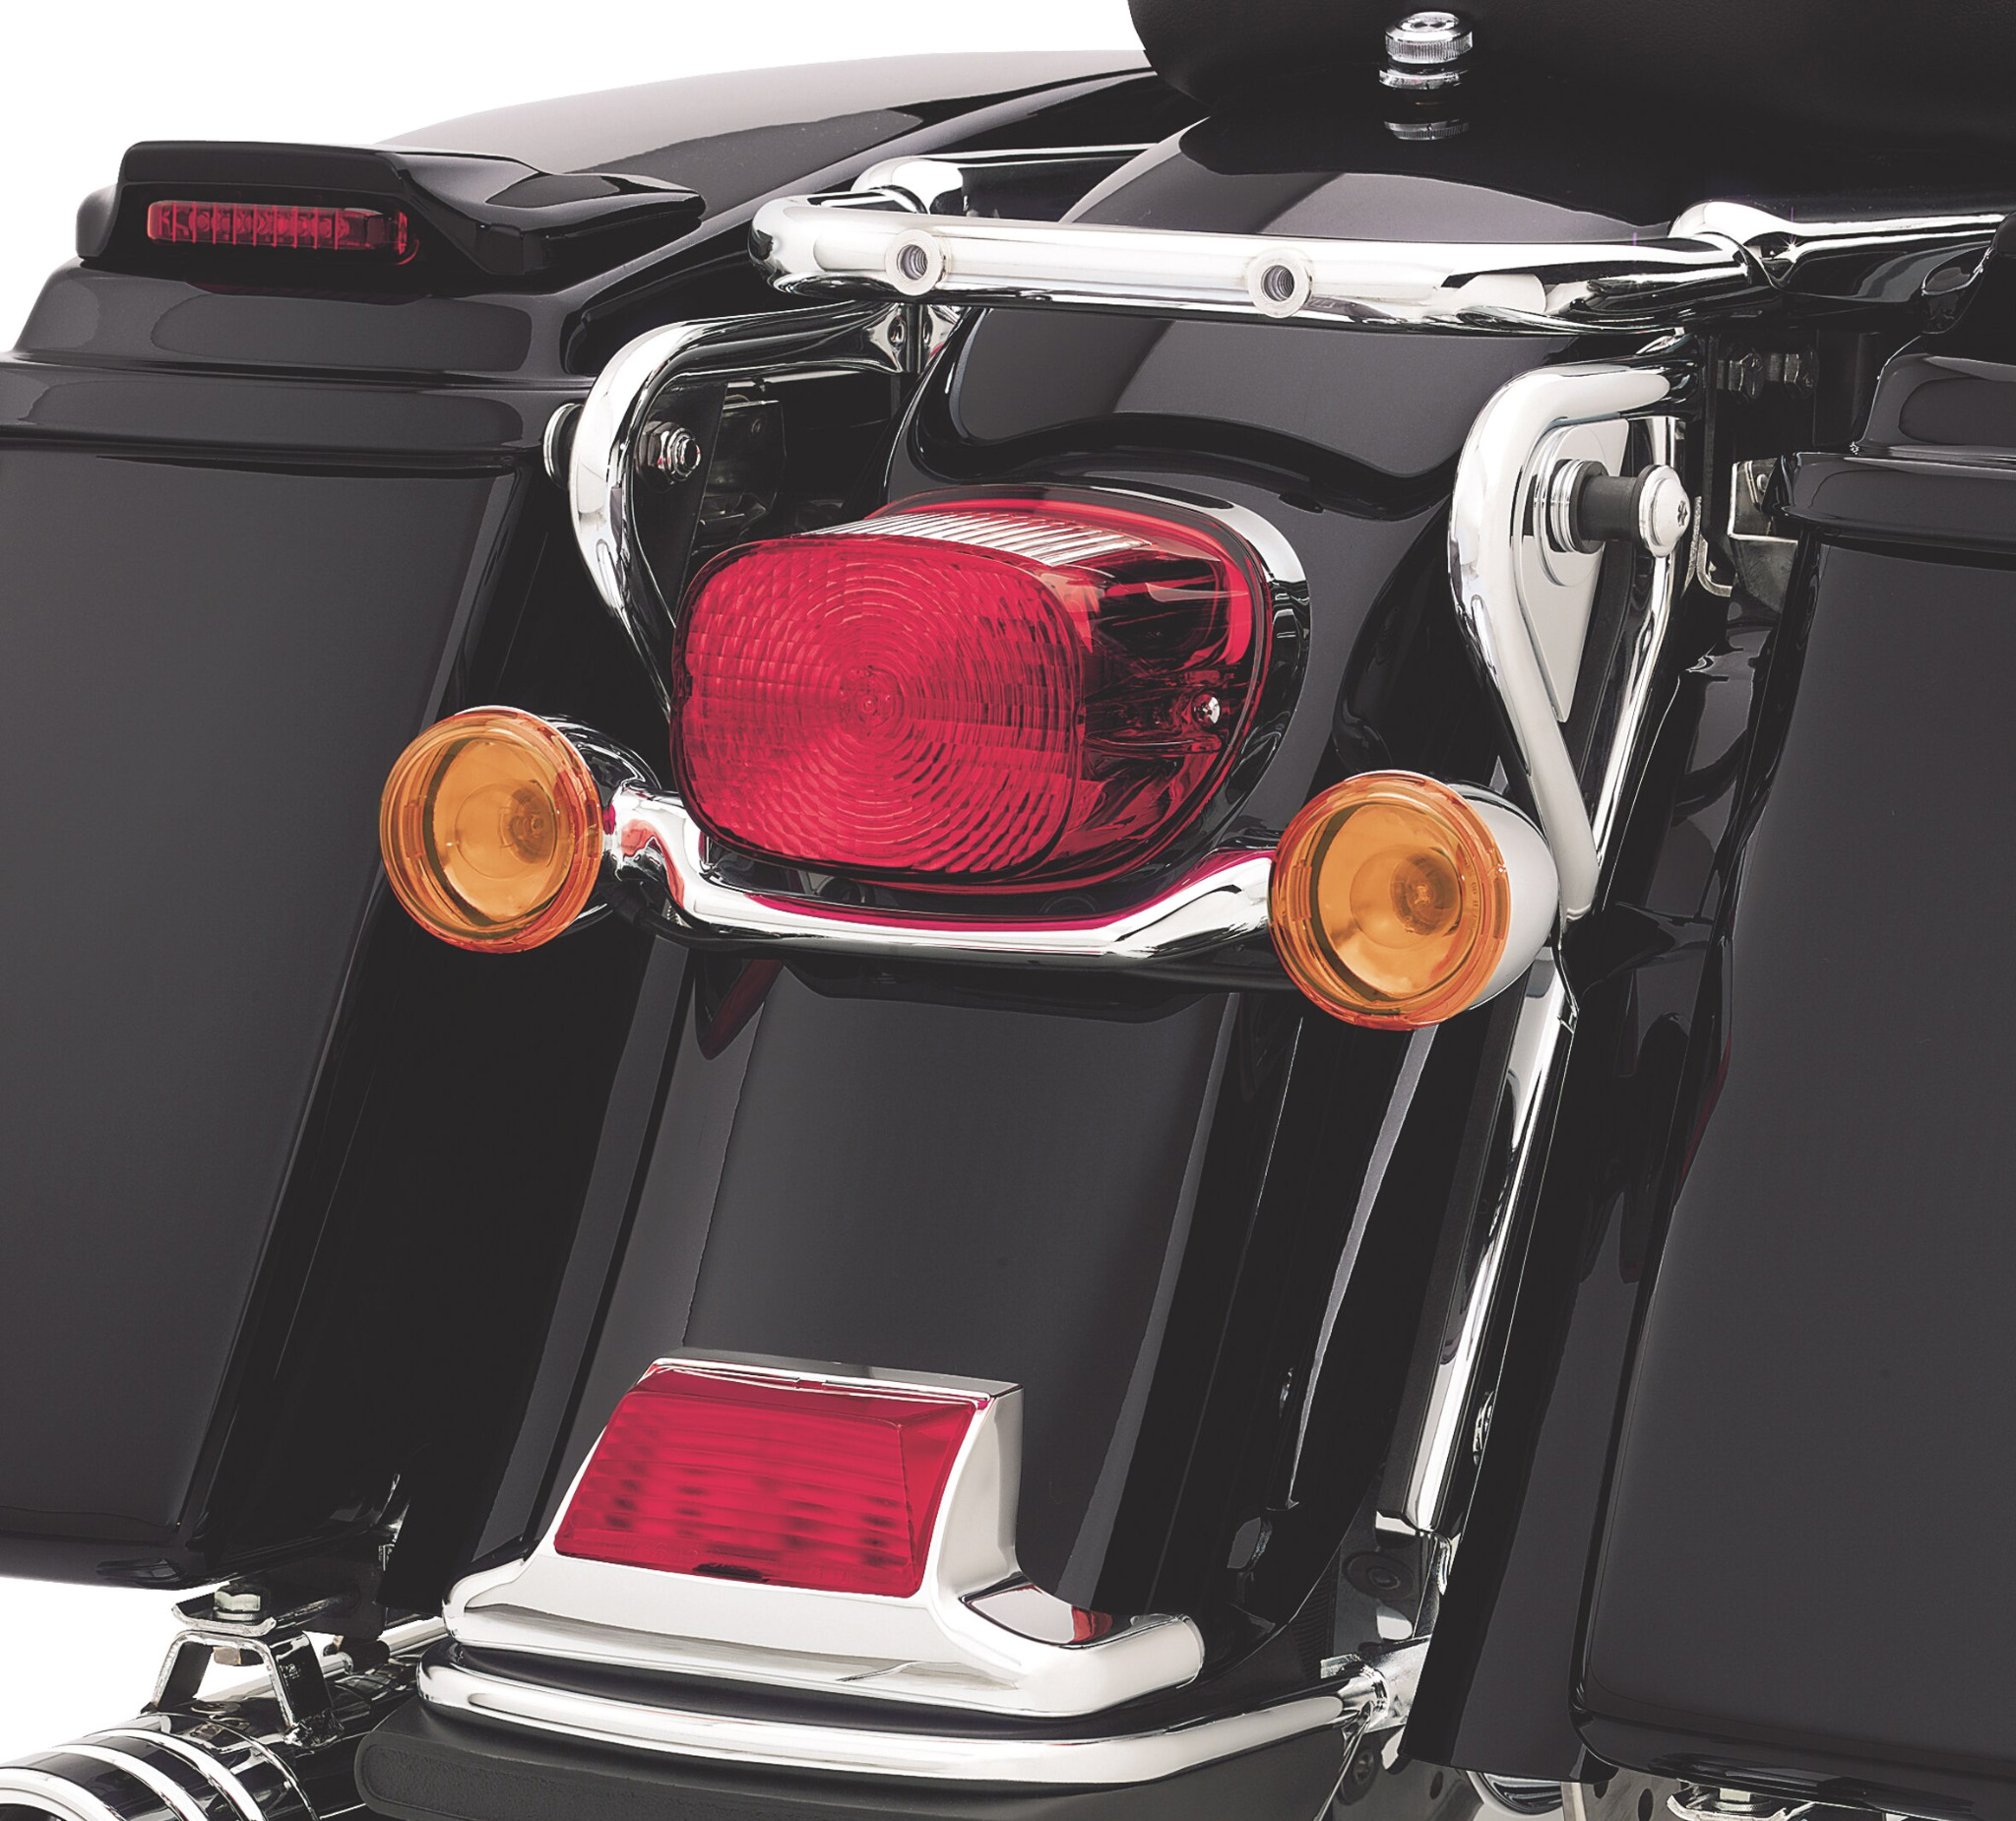 FXSTD LED Smoke Taillight Light For 2000-2007 Harley Davidson Softail Deuce